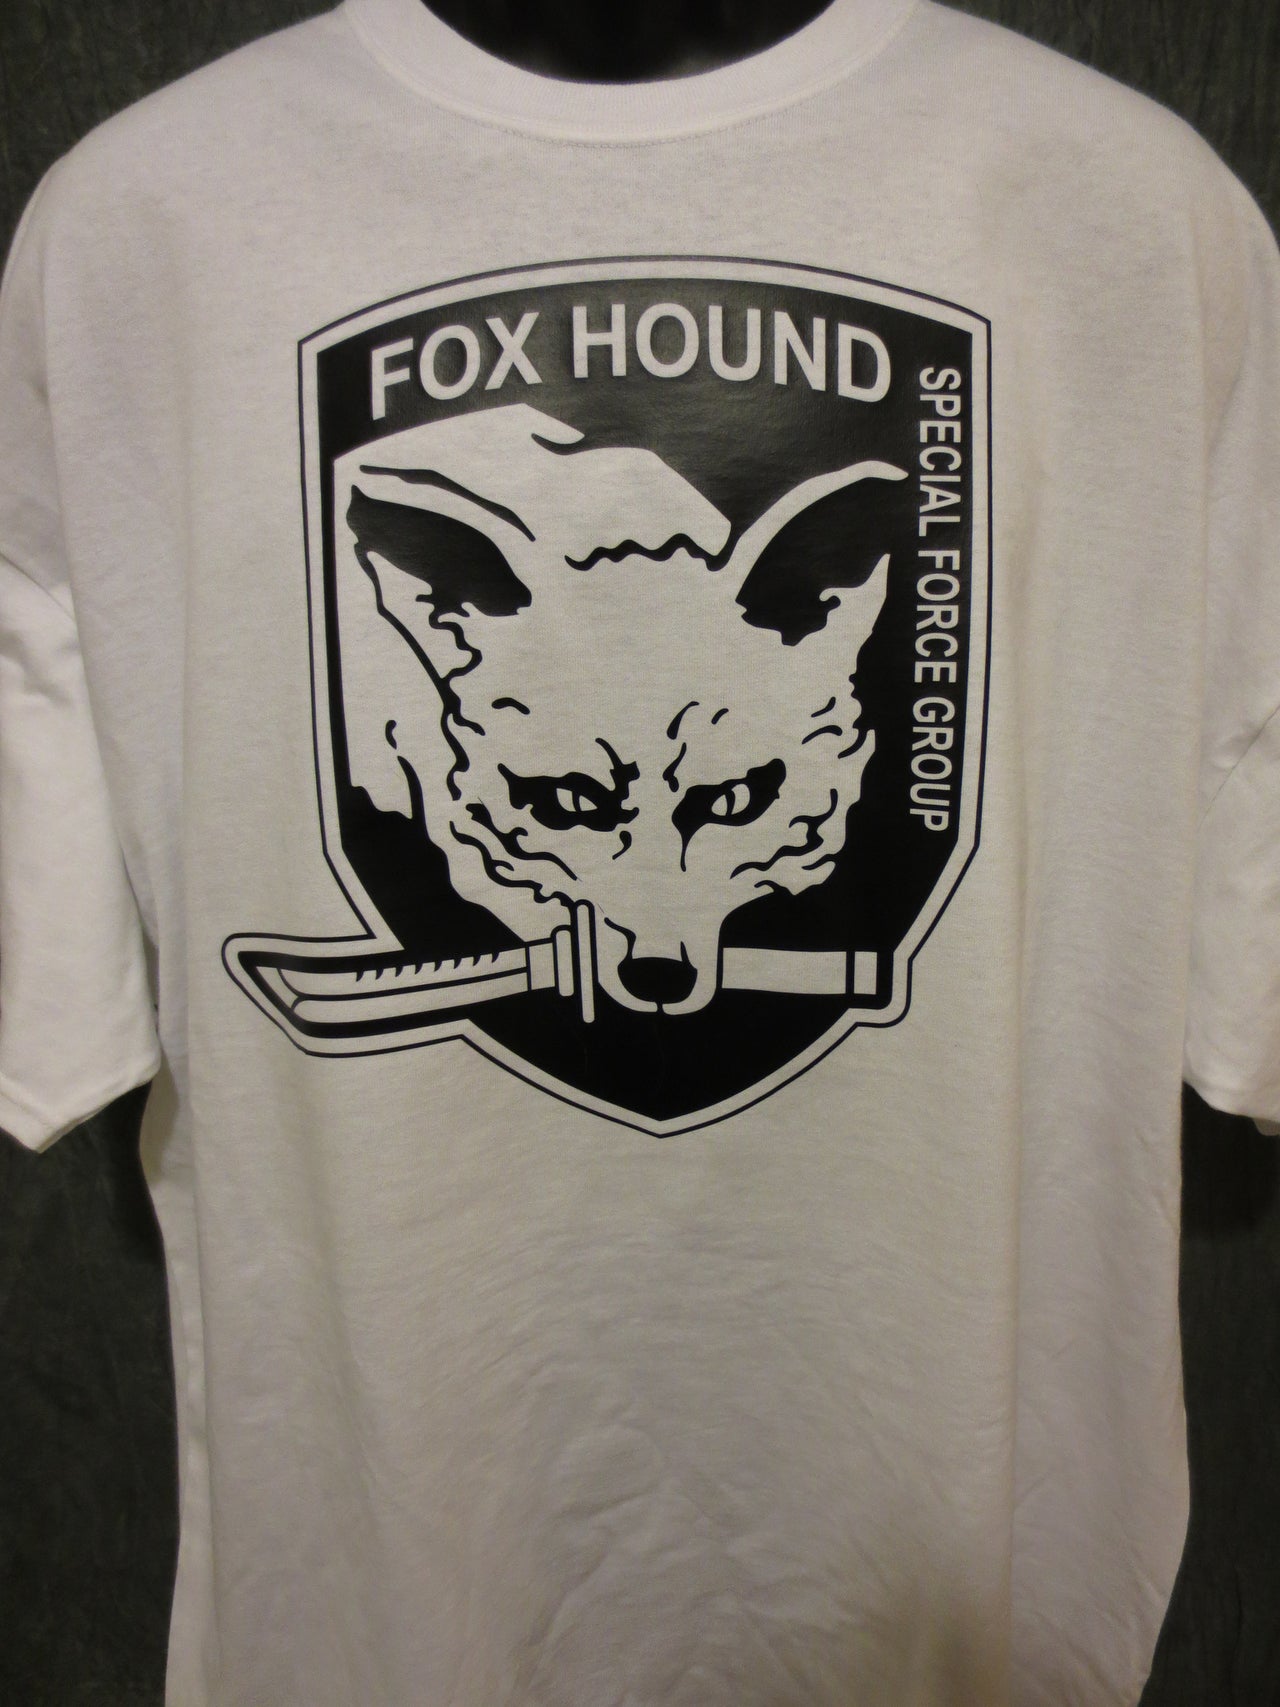 Metal Gear Solid Fox Hound Special Force Group Tshirt:White With Black Print - TshirtNow.net - 5